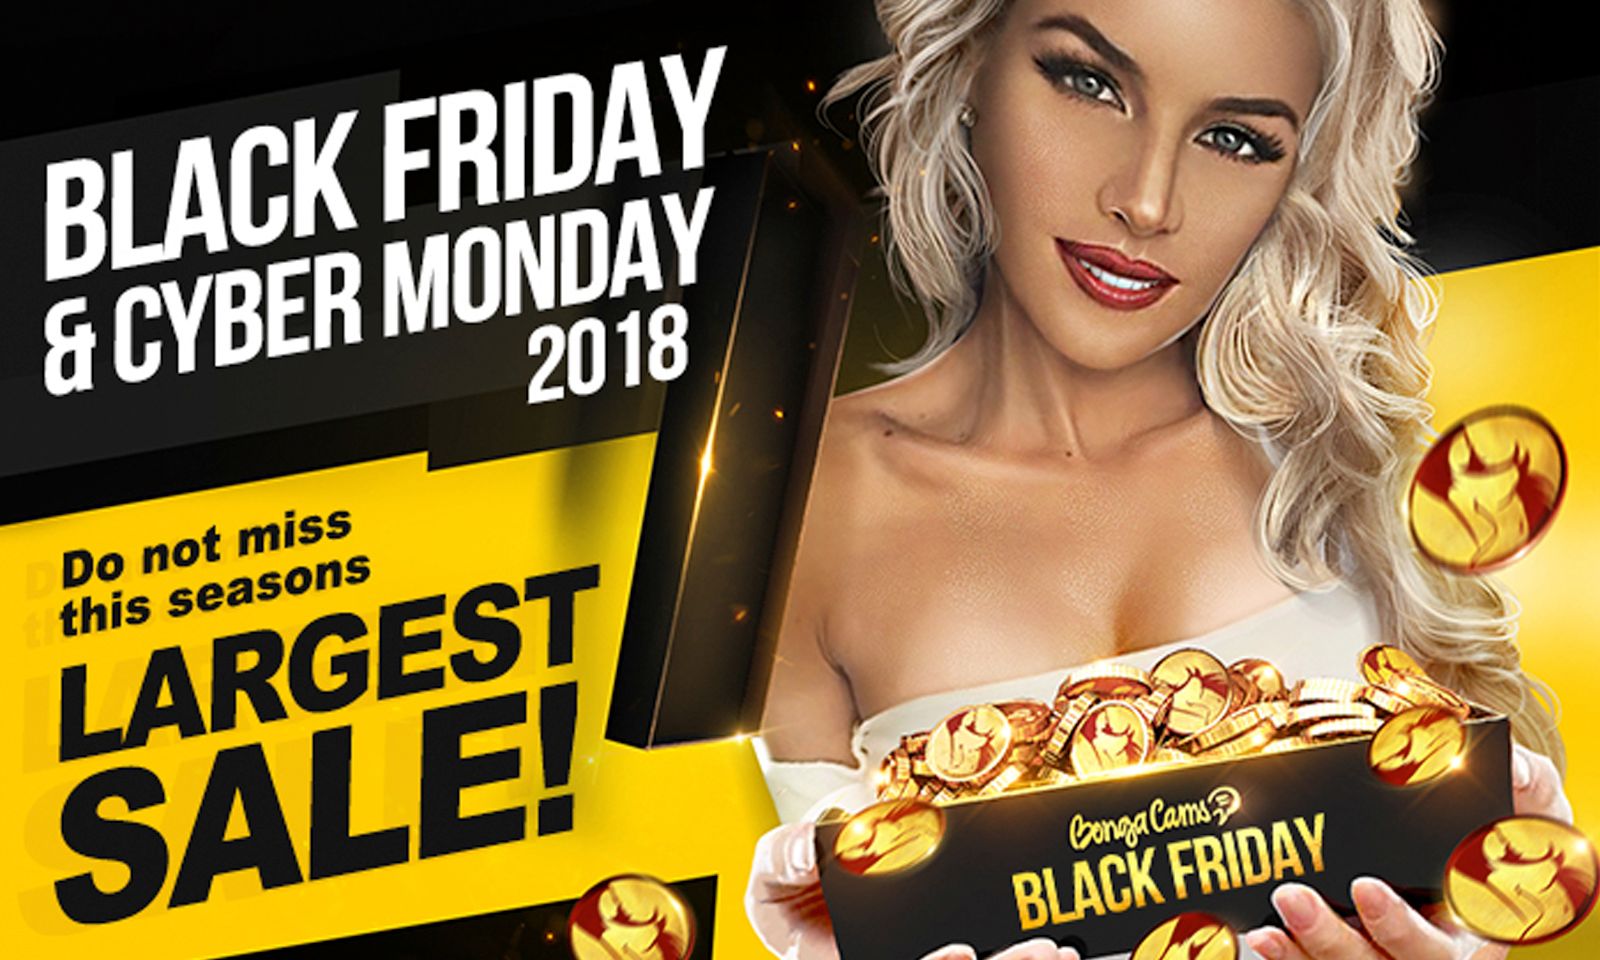 BongaCams Hosting Big Sales on Black Friday, Cyber Monday